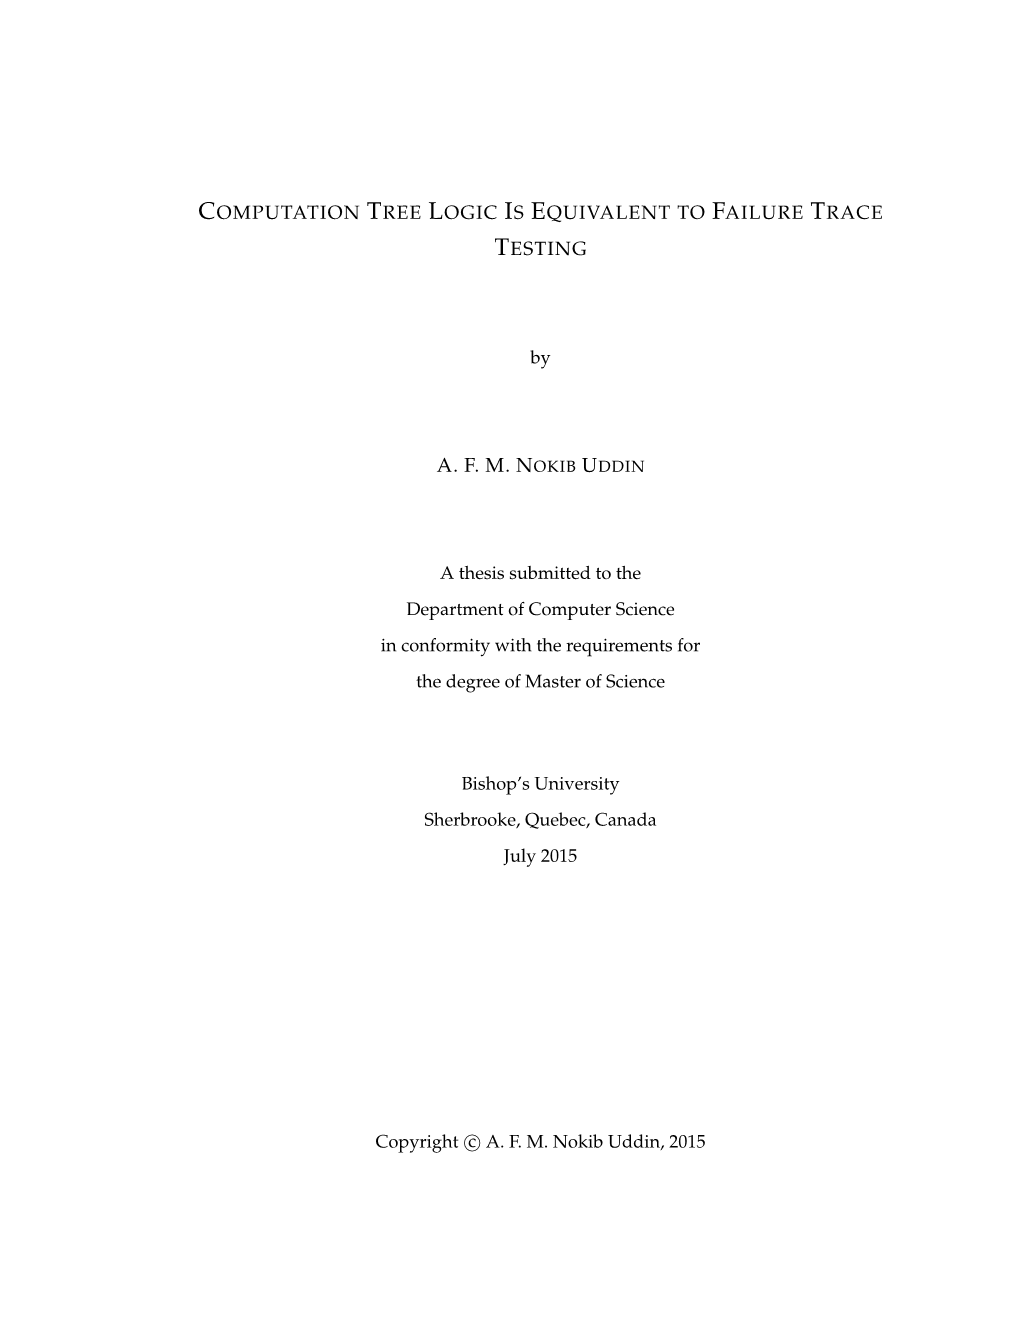 Computation Tree Logic Is Equivalent to Failure Trace Testing